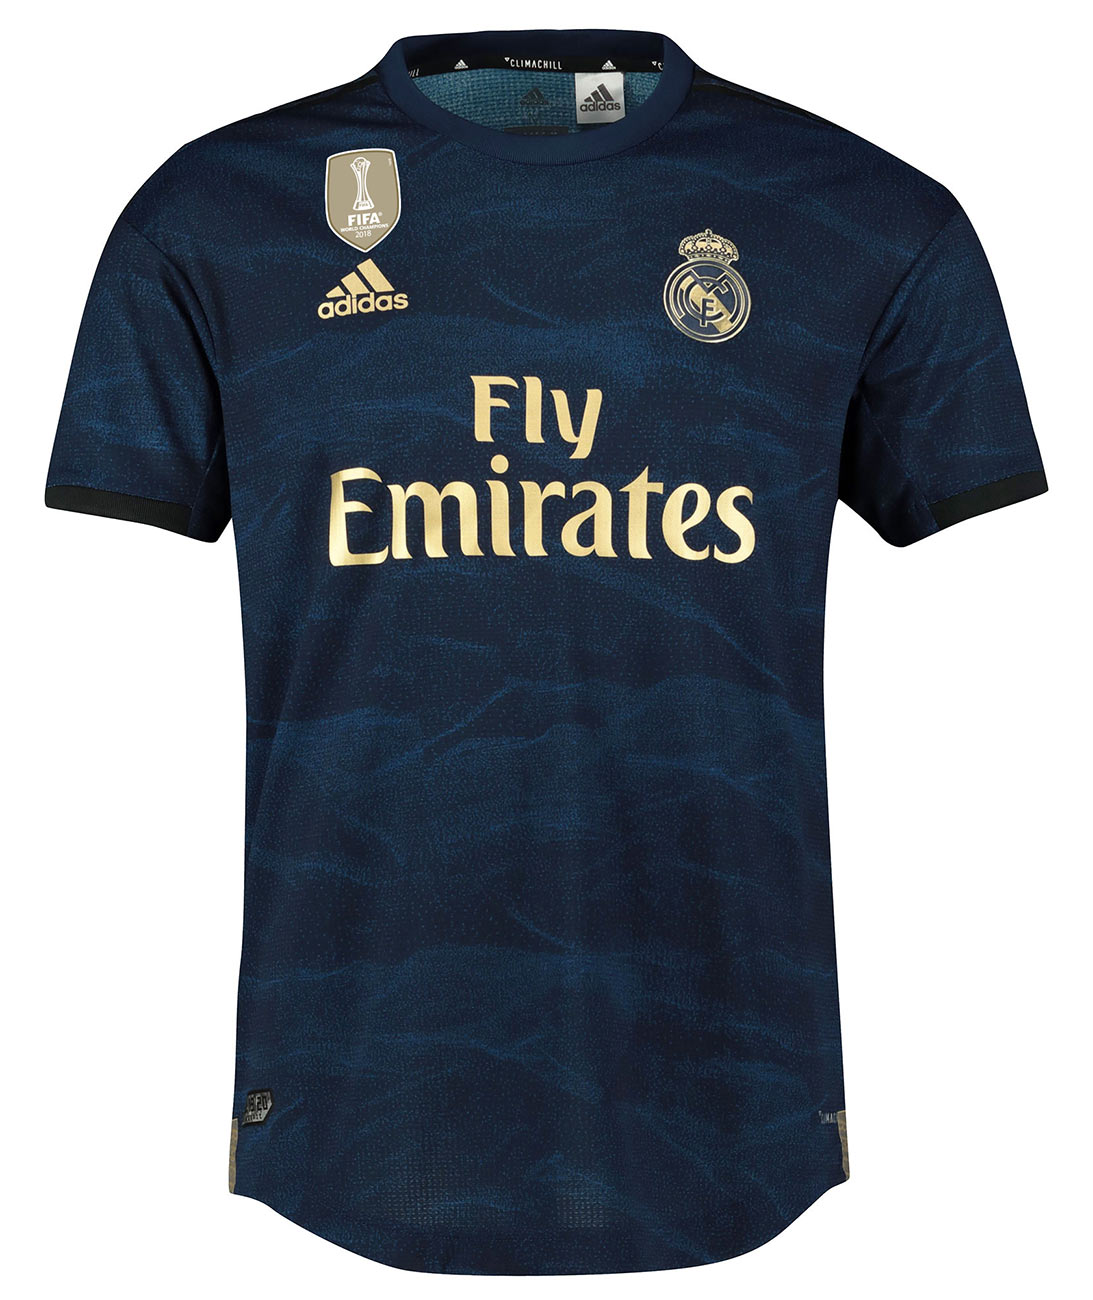 Maglie Real Madrid 2019-2020 adidas, il bianco sposa l'oro